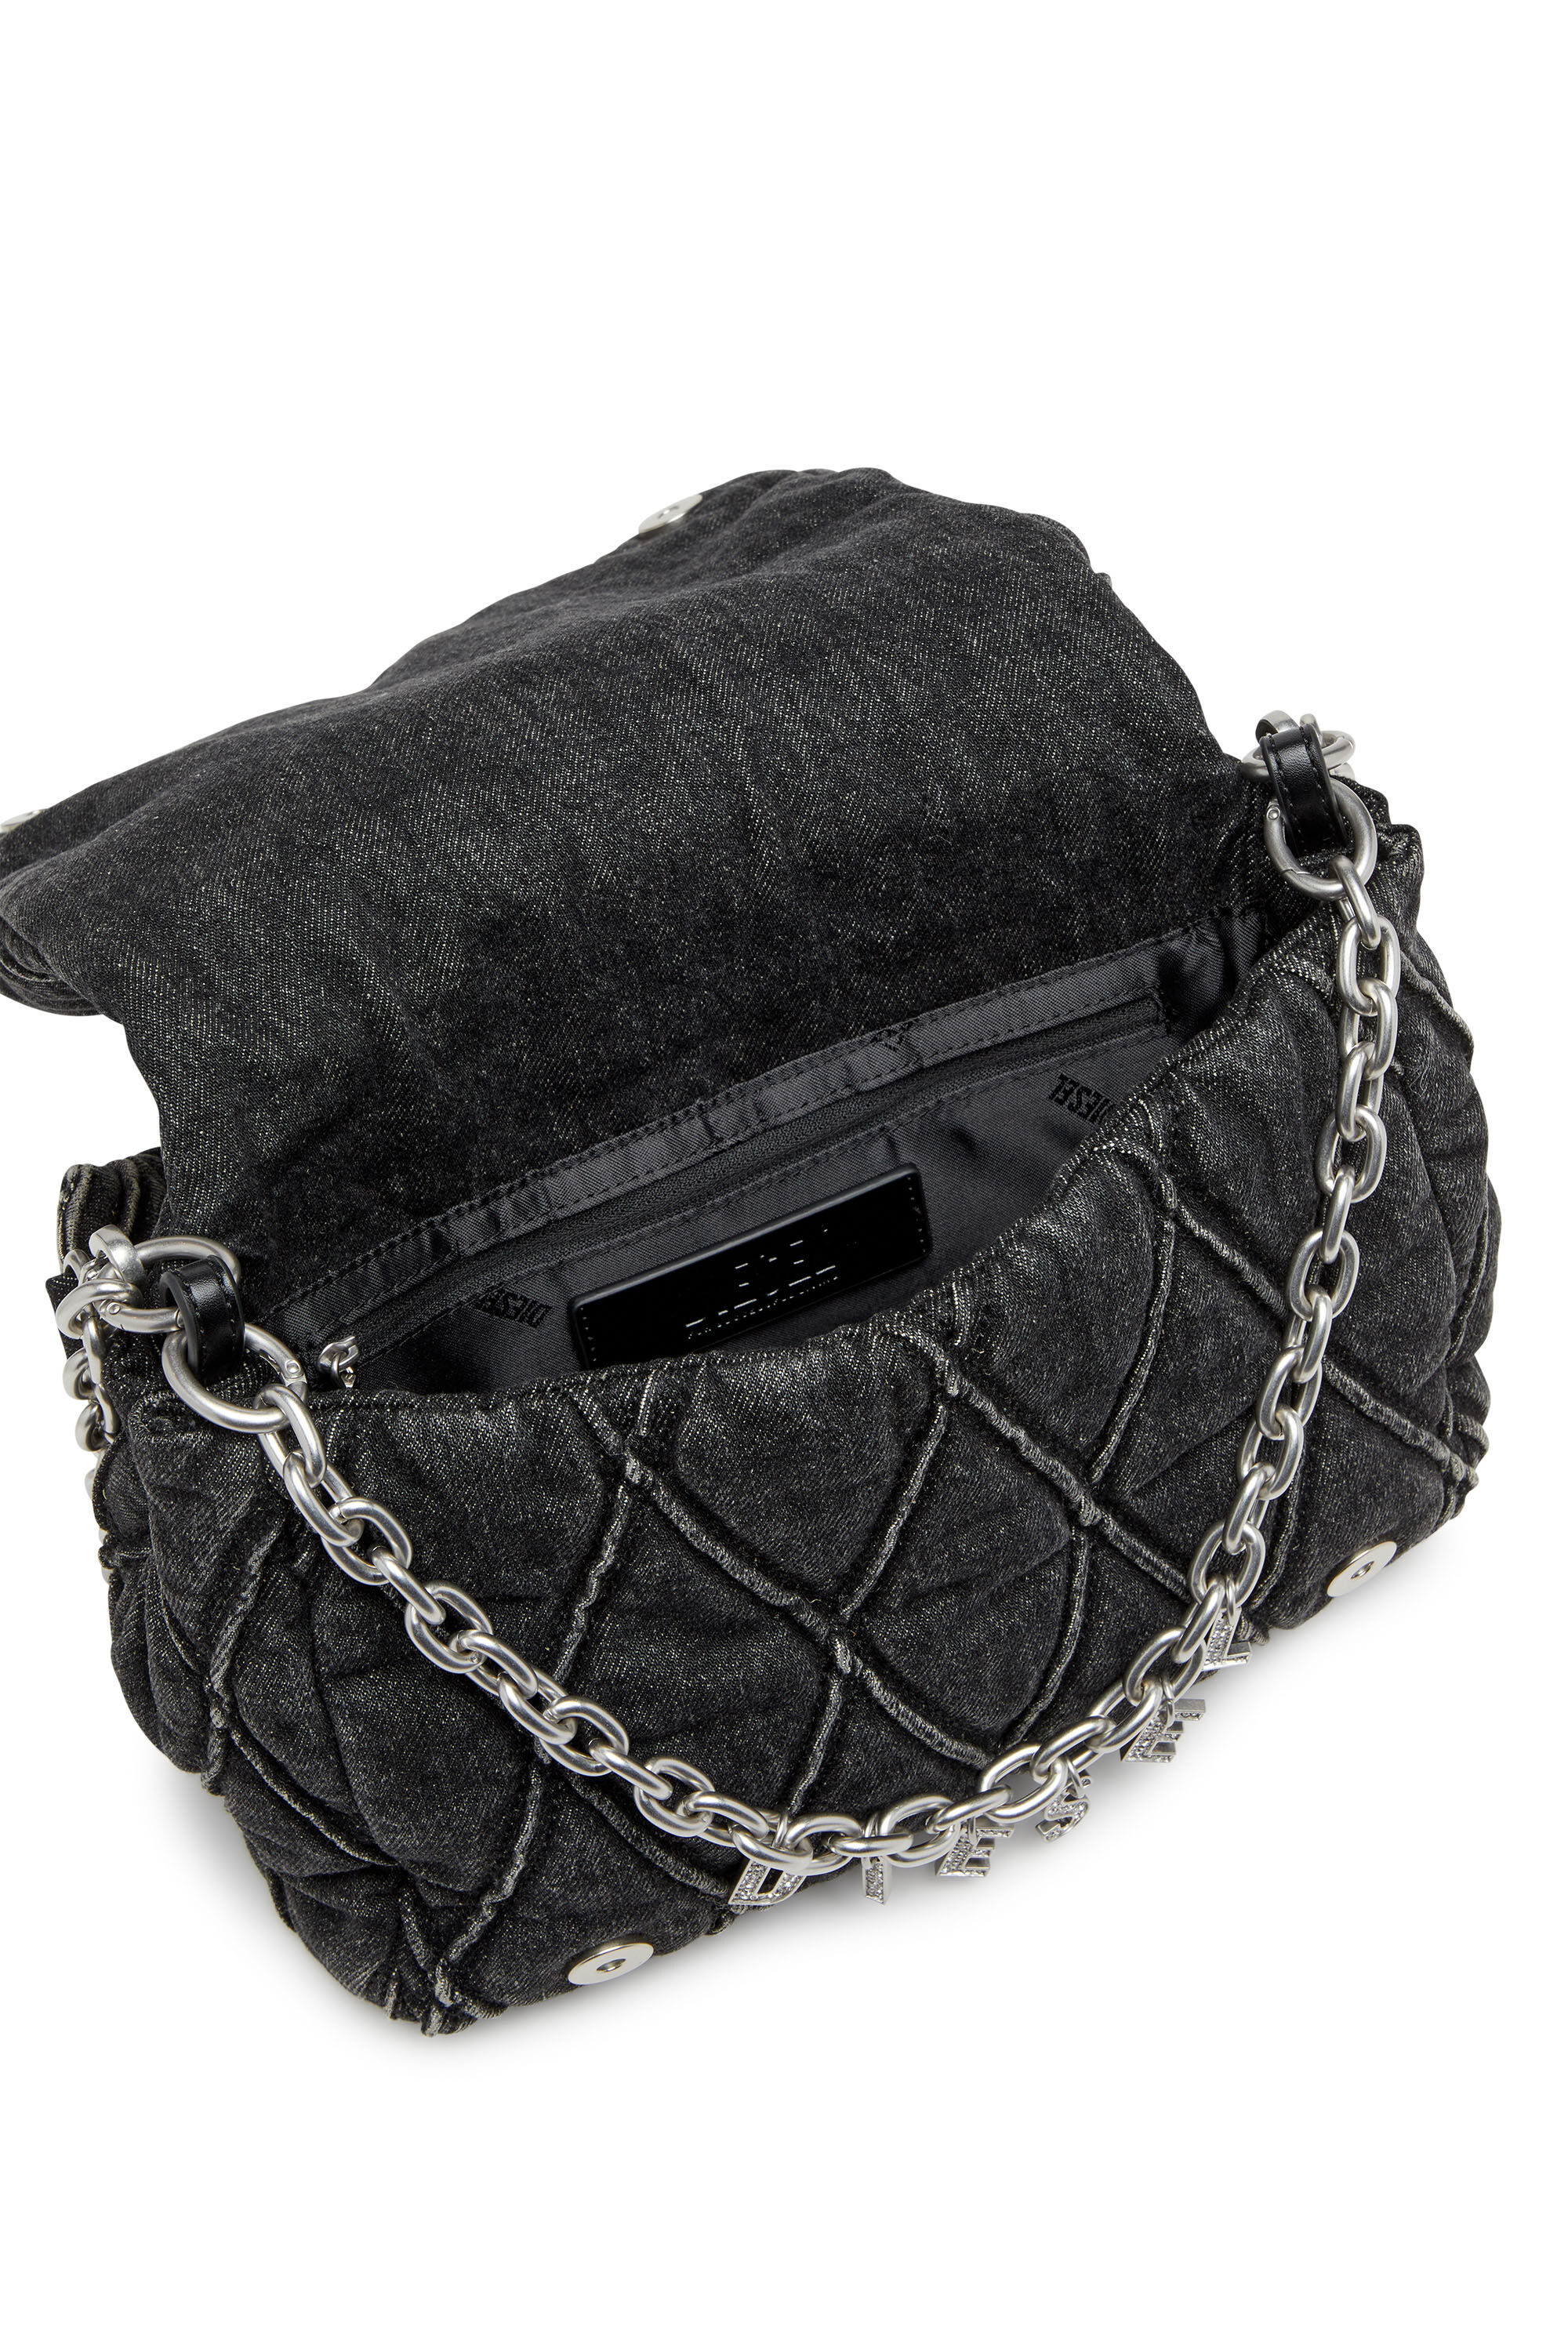 Chanel Uniform Employee Black Small Crossbody Messenger Bag